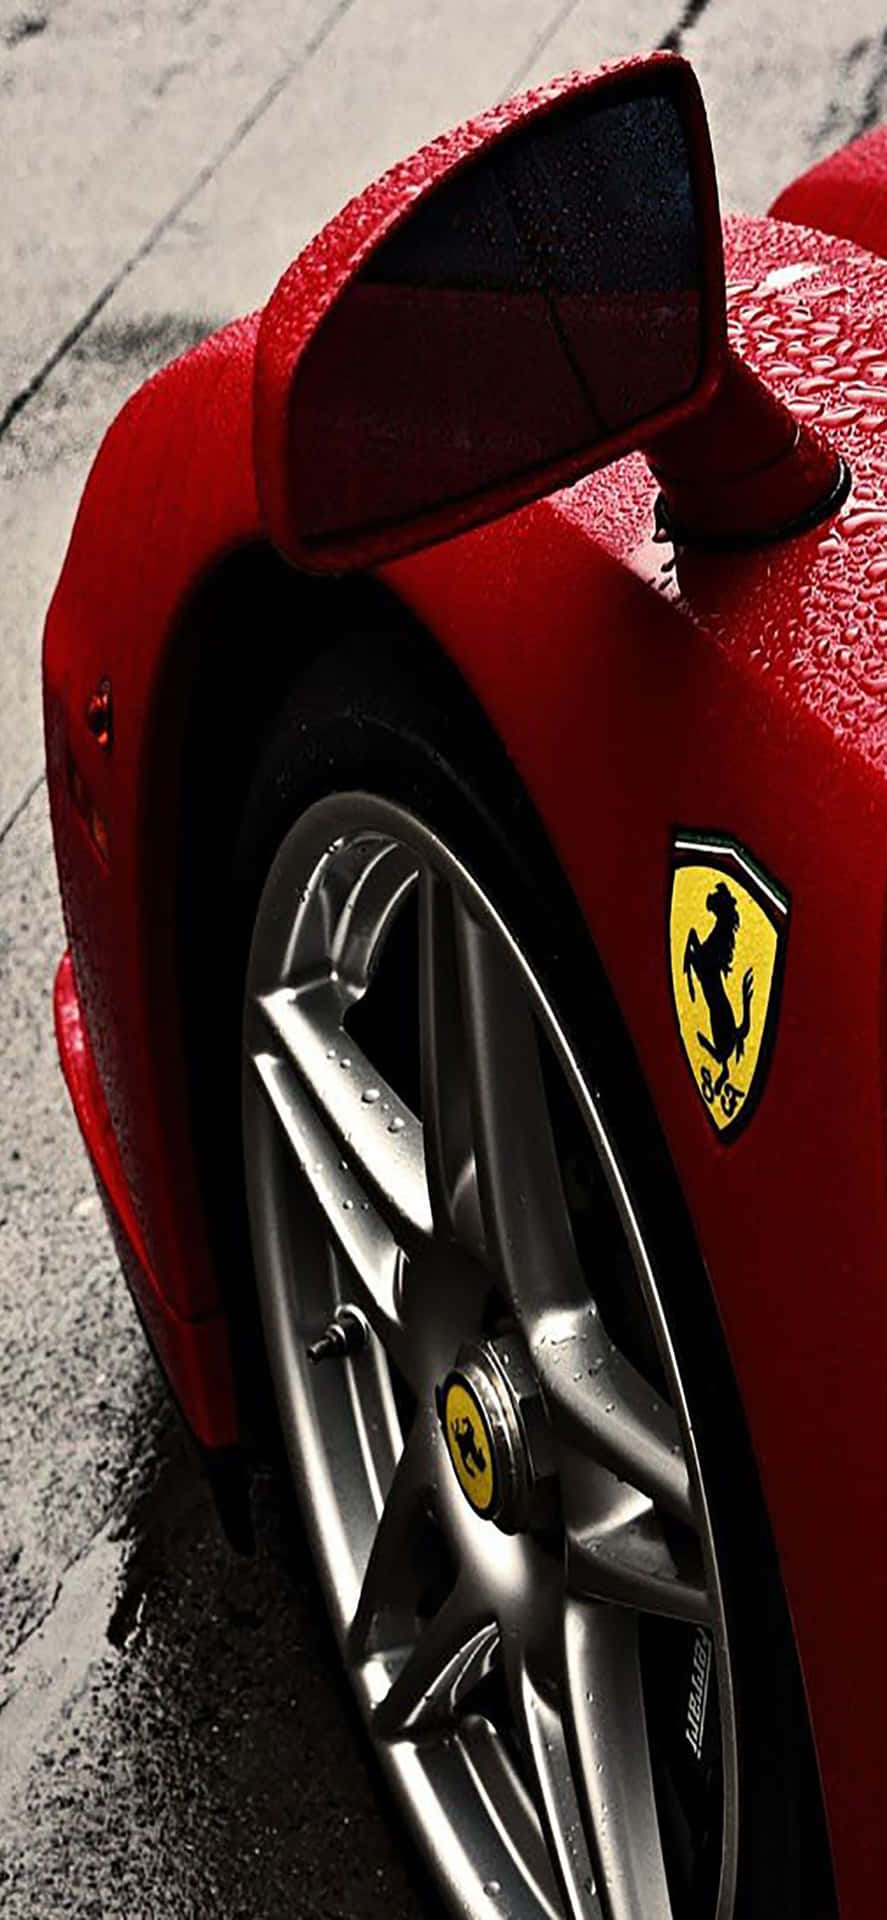 Iphonexs Max Ferrari Bakgrundsbild Sida Profil Av En Röd Ferrari Enzo.